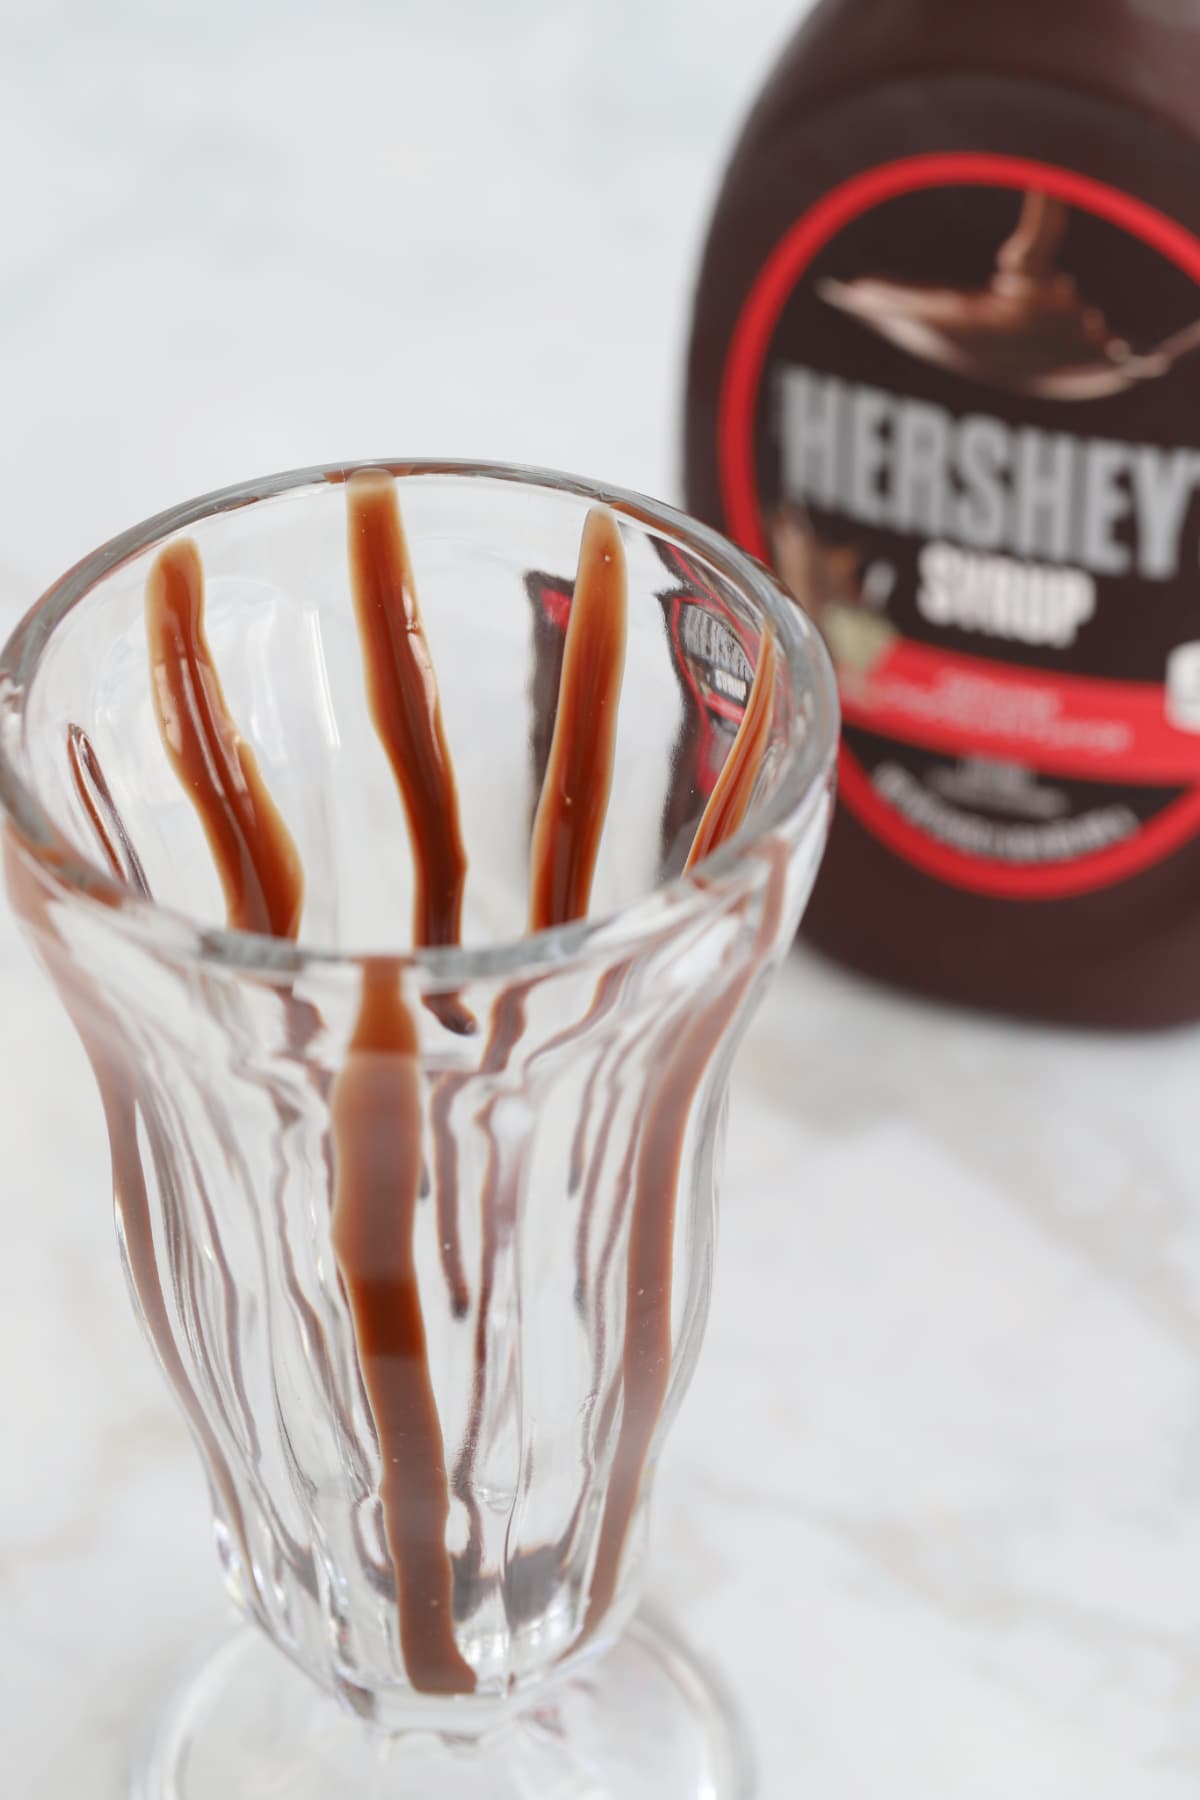 Milkshake lined with chocolate syrup